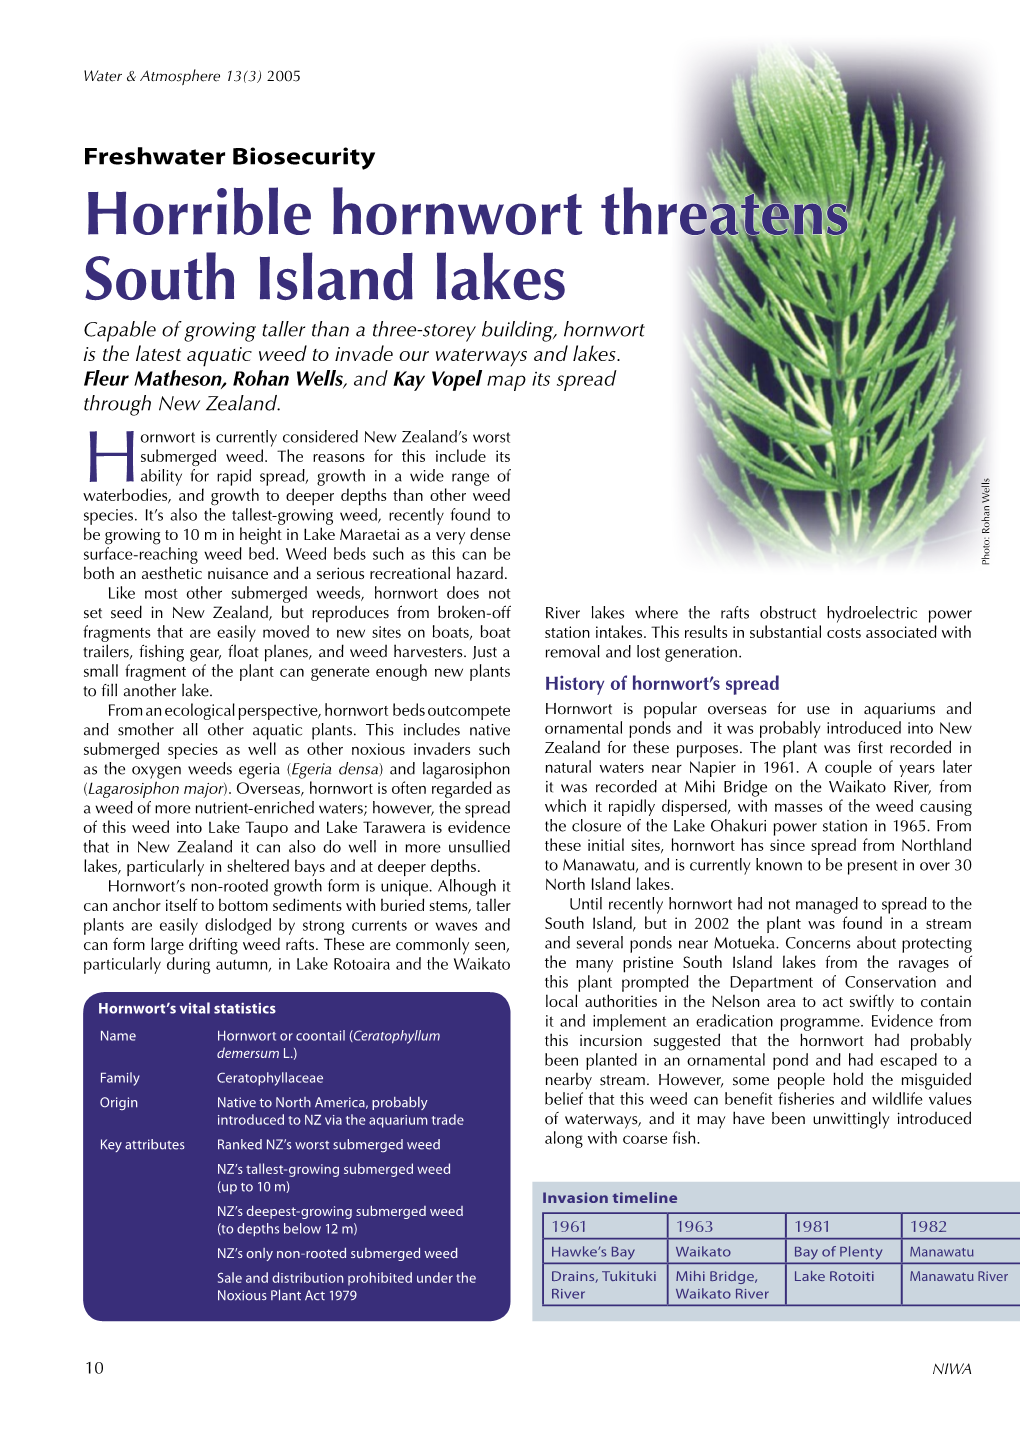 Horrible Hornwort Threatens South Island Lakes